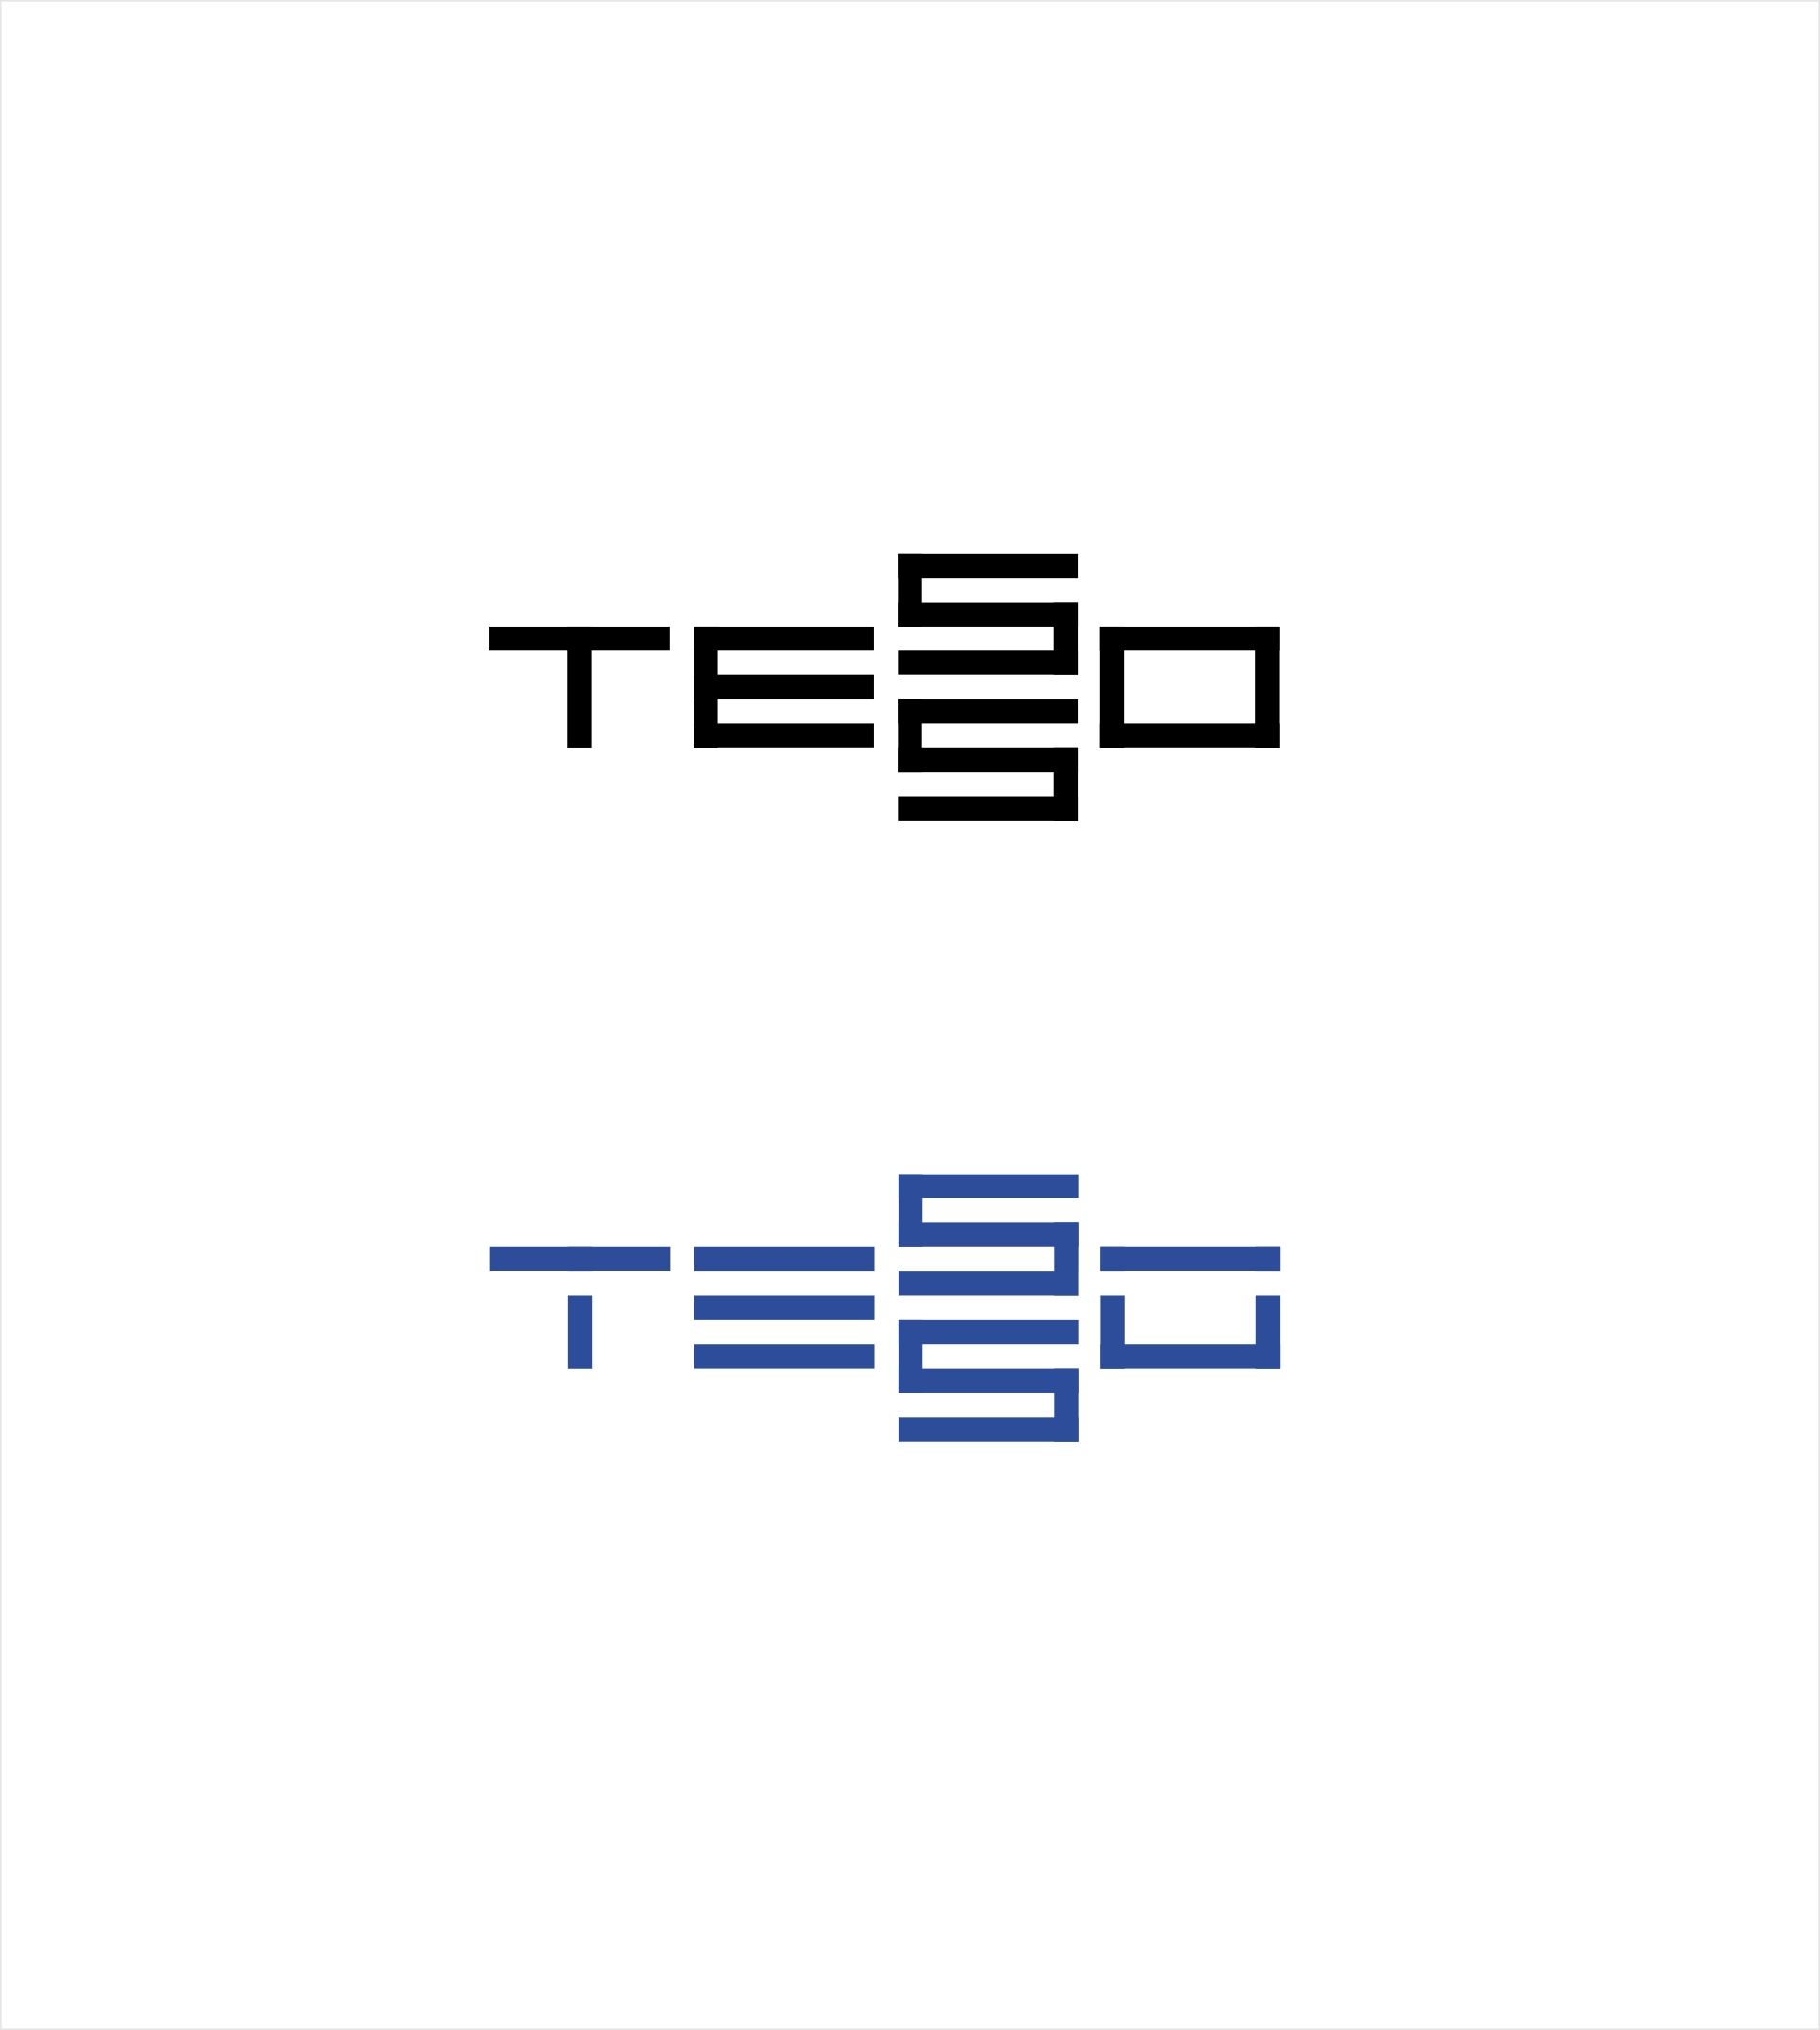 Логотип для TESSO - дизайнер kras-sky